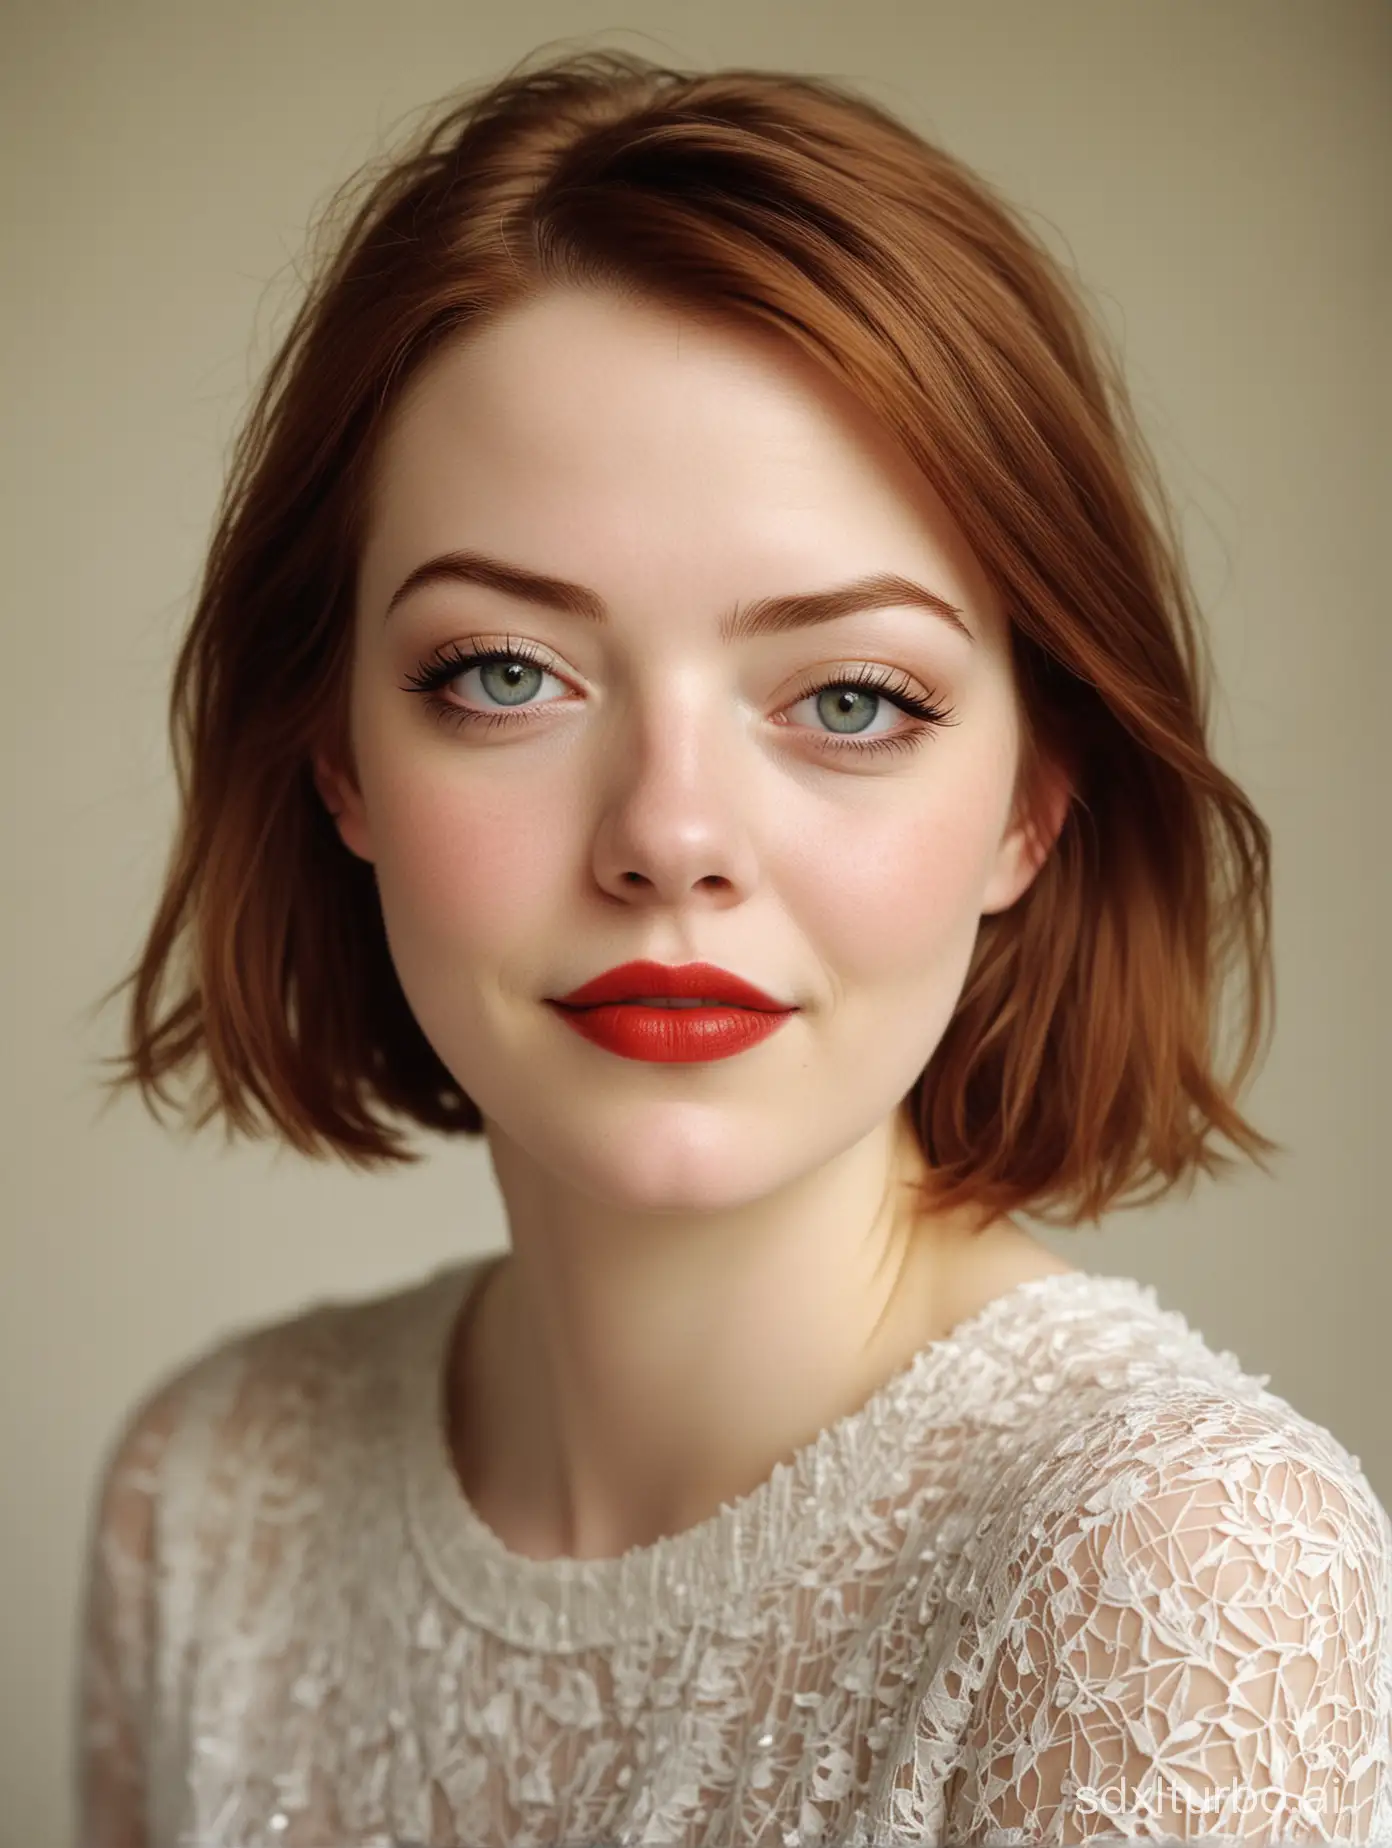 Teenage-Joy-Emma-Stone-Lookalike-with-Vibrant-Red-Lips-and-Expressive-Eyes